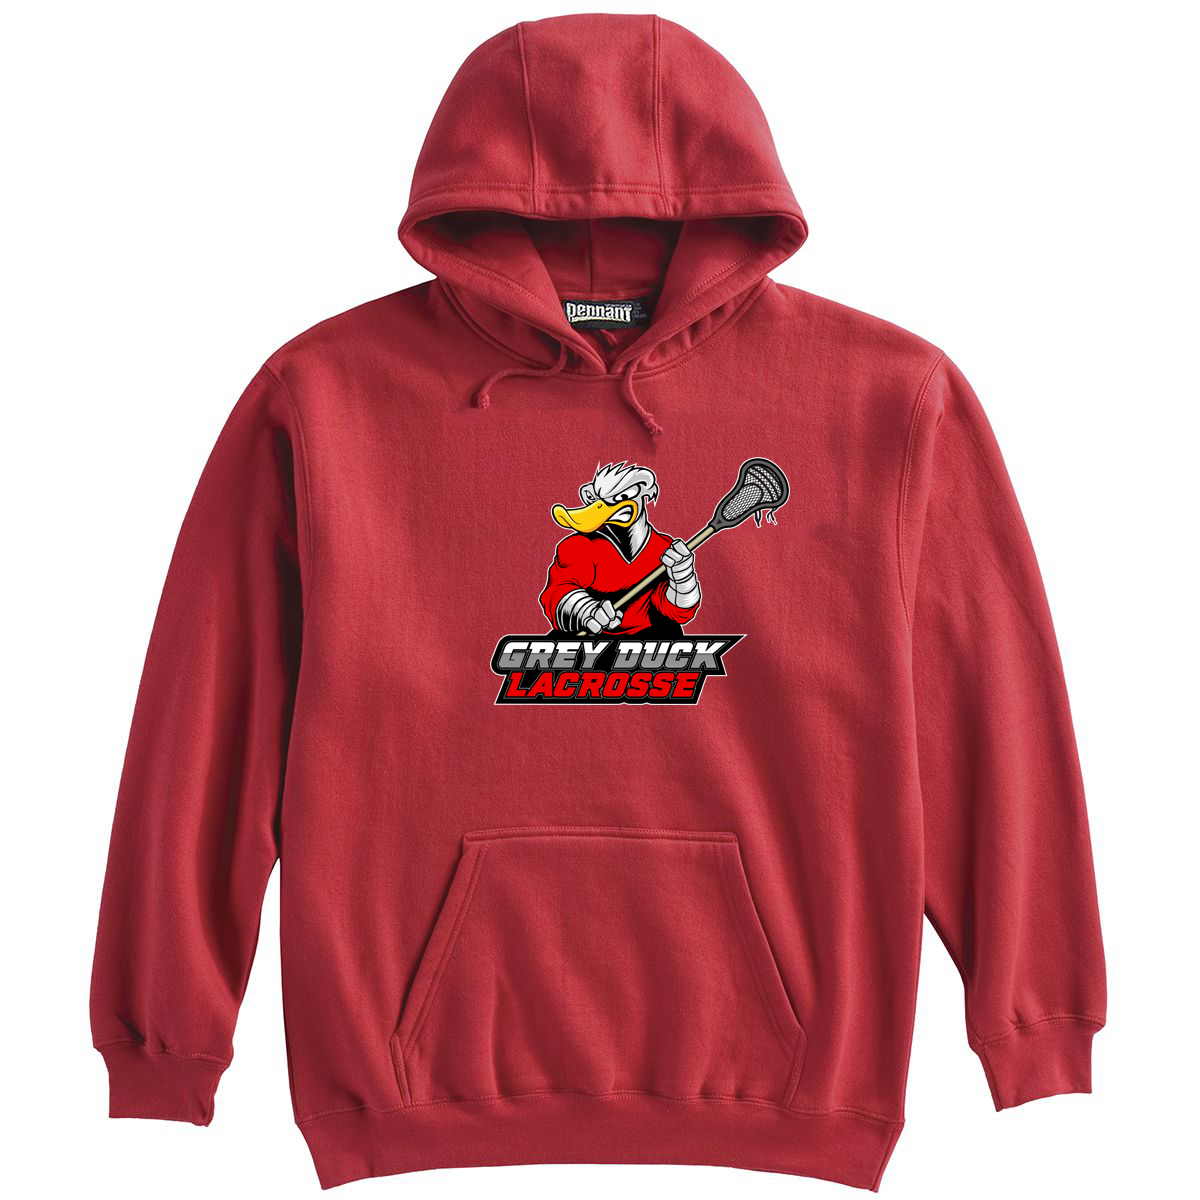 Grey Duck Lacrosse Sweatshirt